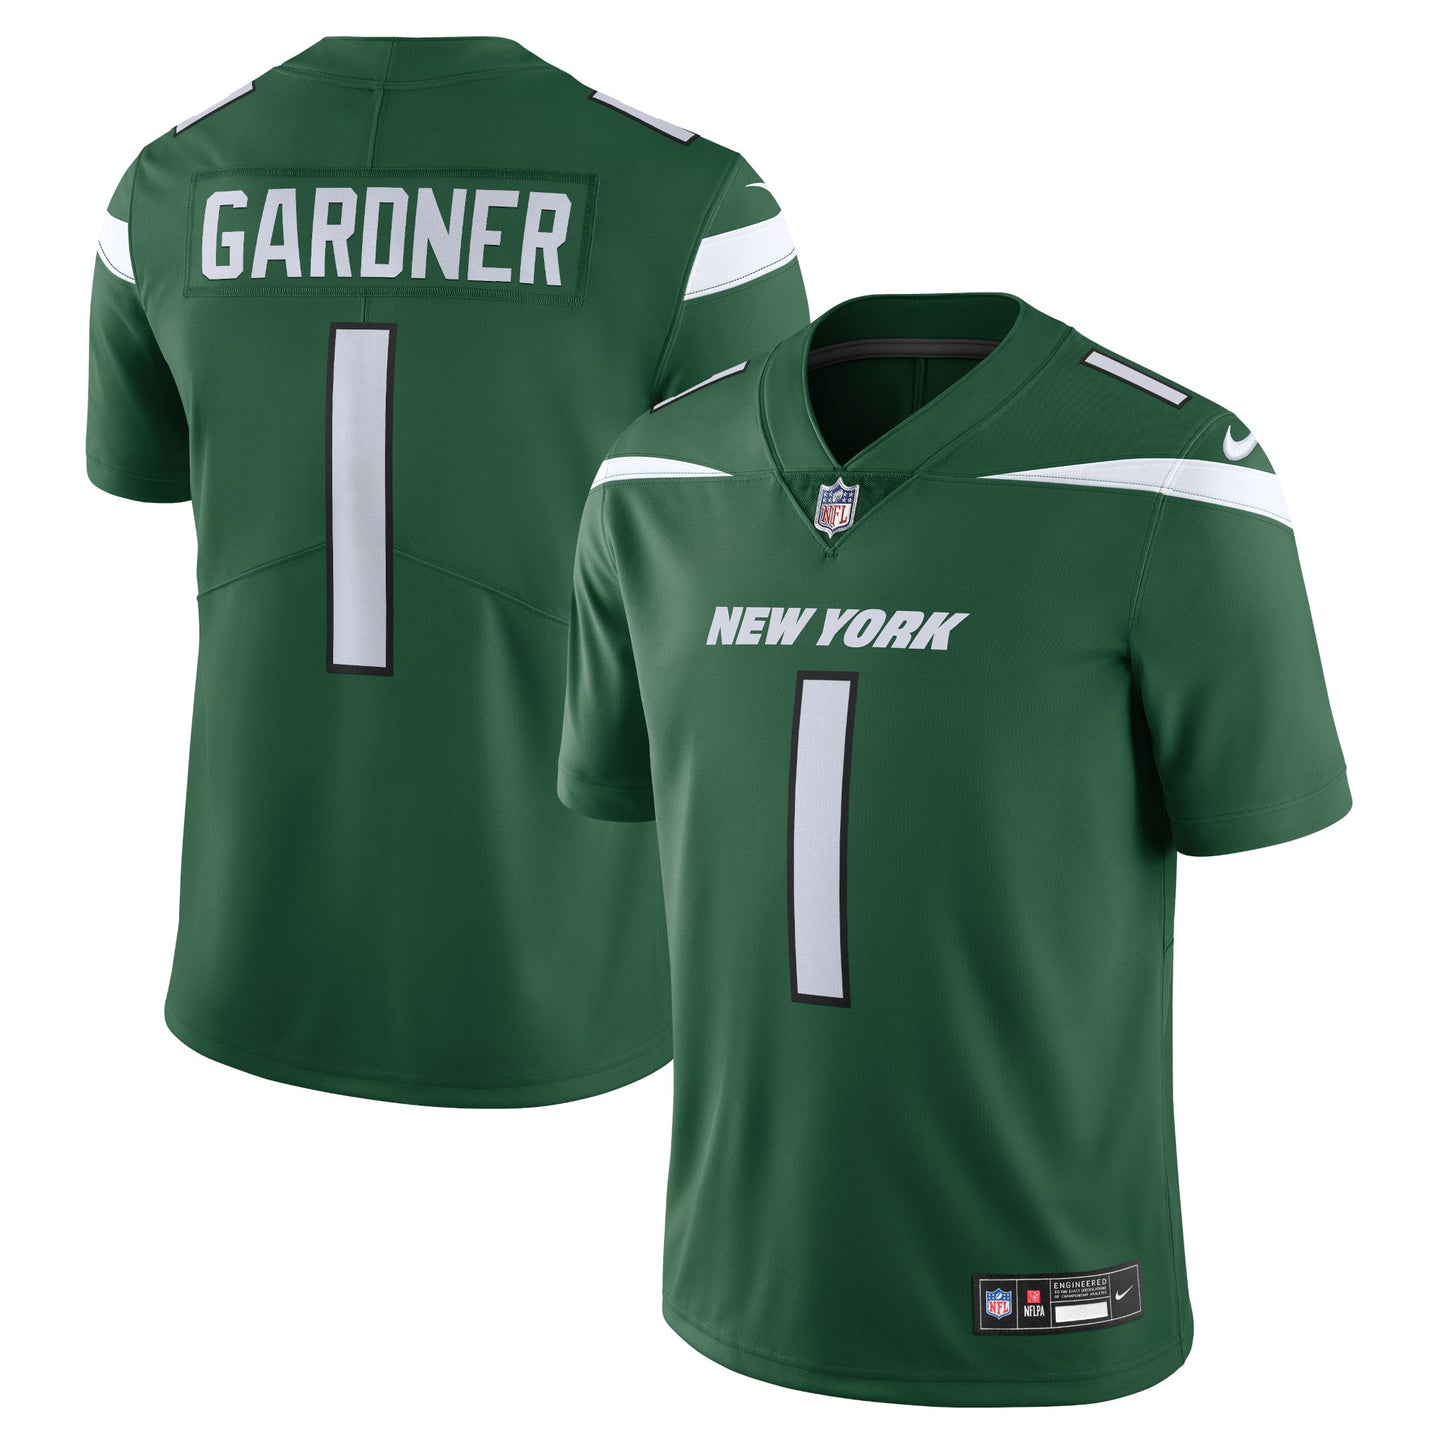 Ahmad Sauce Gardner New York Jets Nike Vapor Untouchable Limited Jersey - Gotham Green